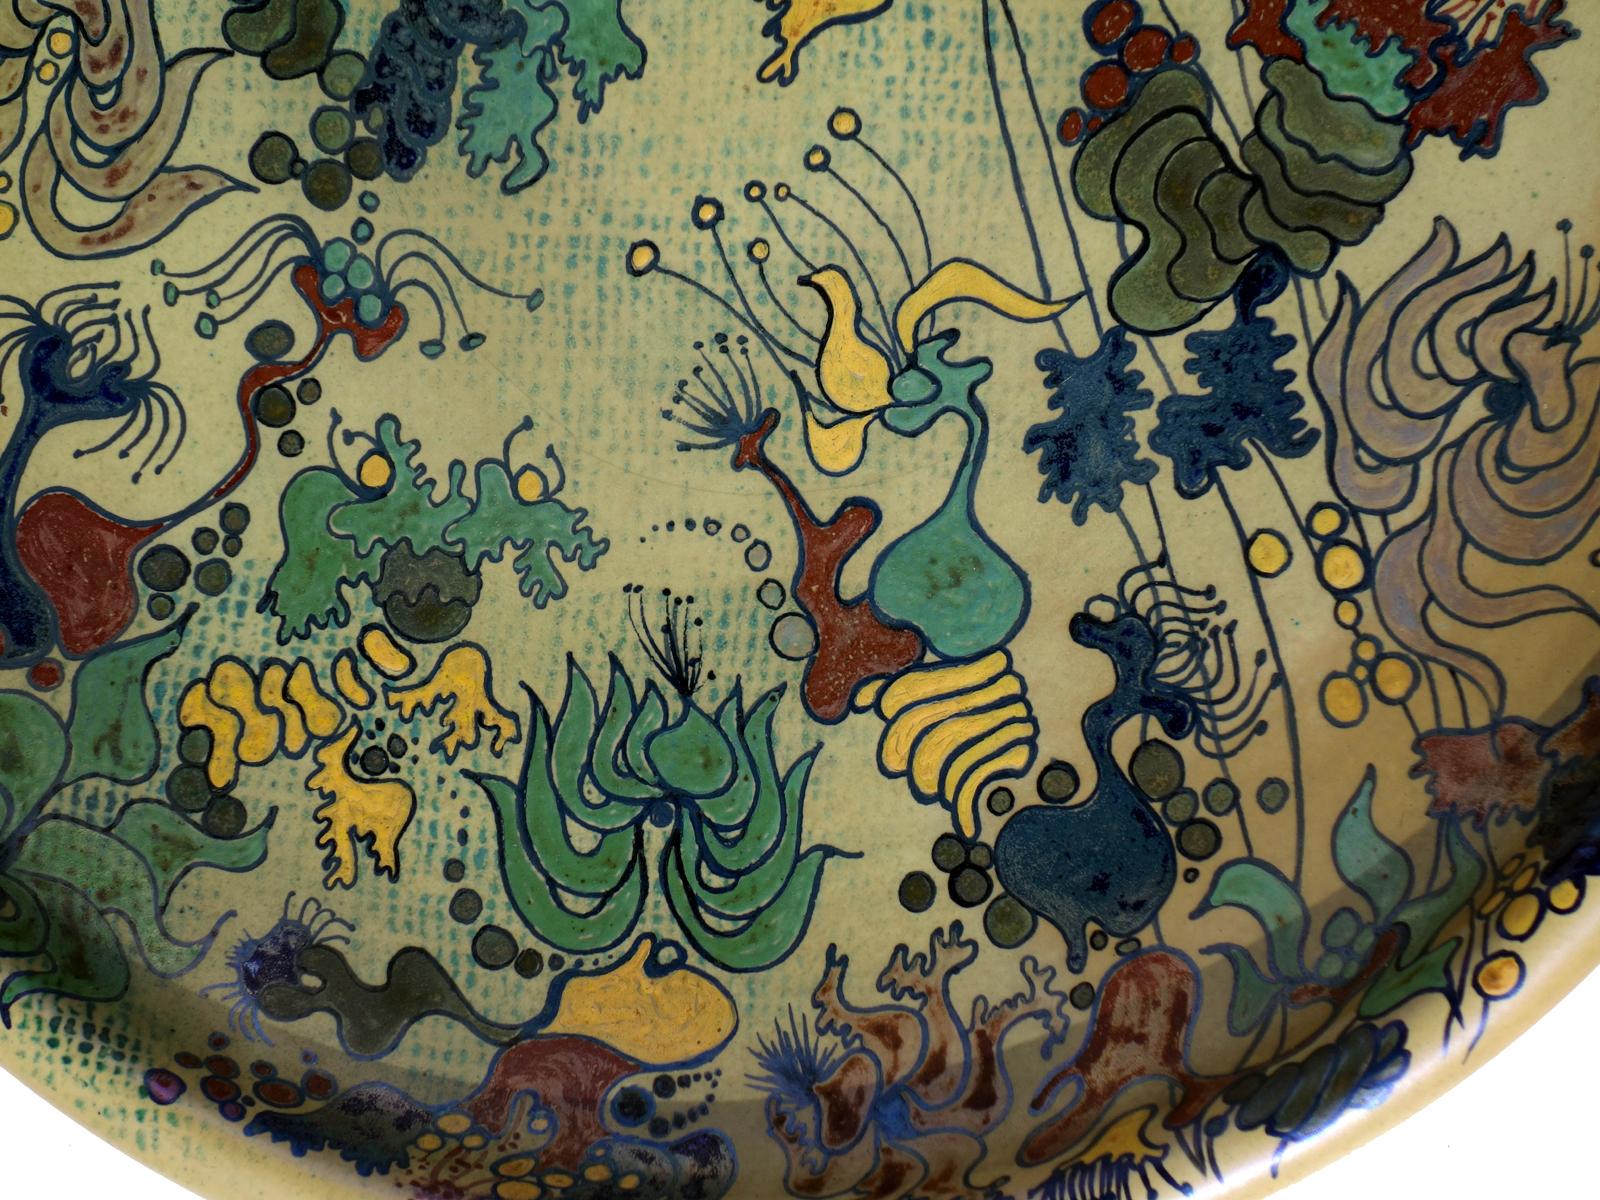 Painted ceramic big plate with marine fauna decor
Signed Onestini Milano Marittima.